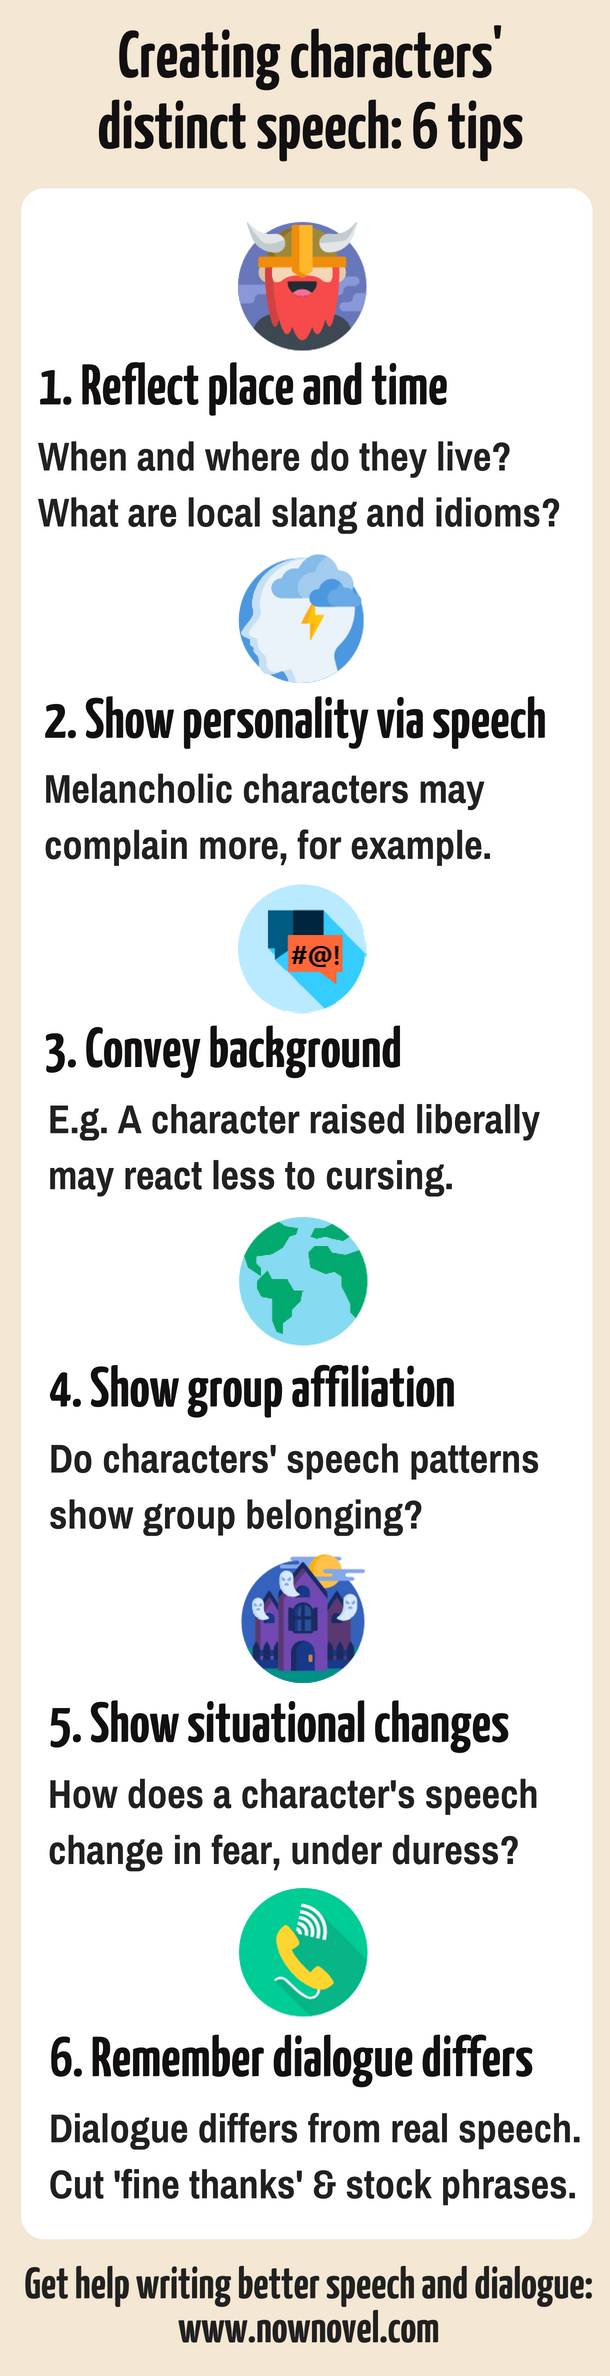 Character speech infographic | Now Novel